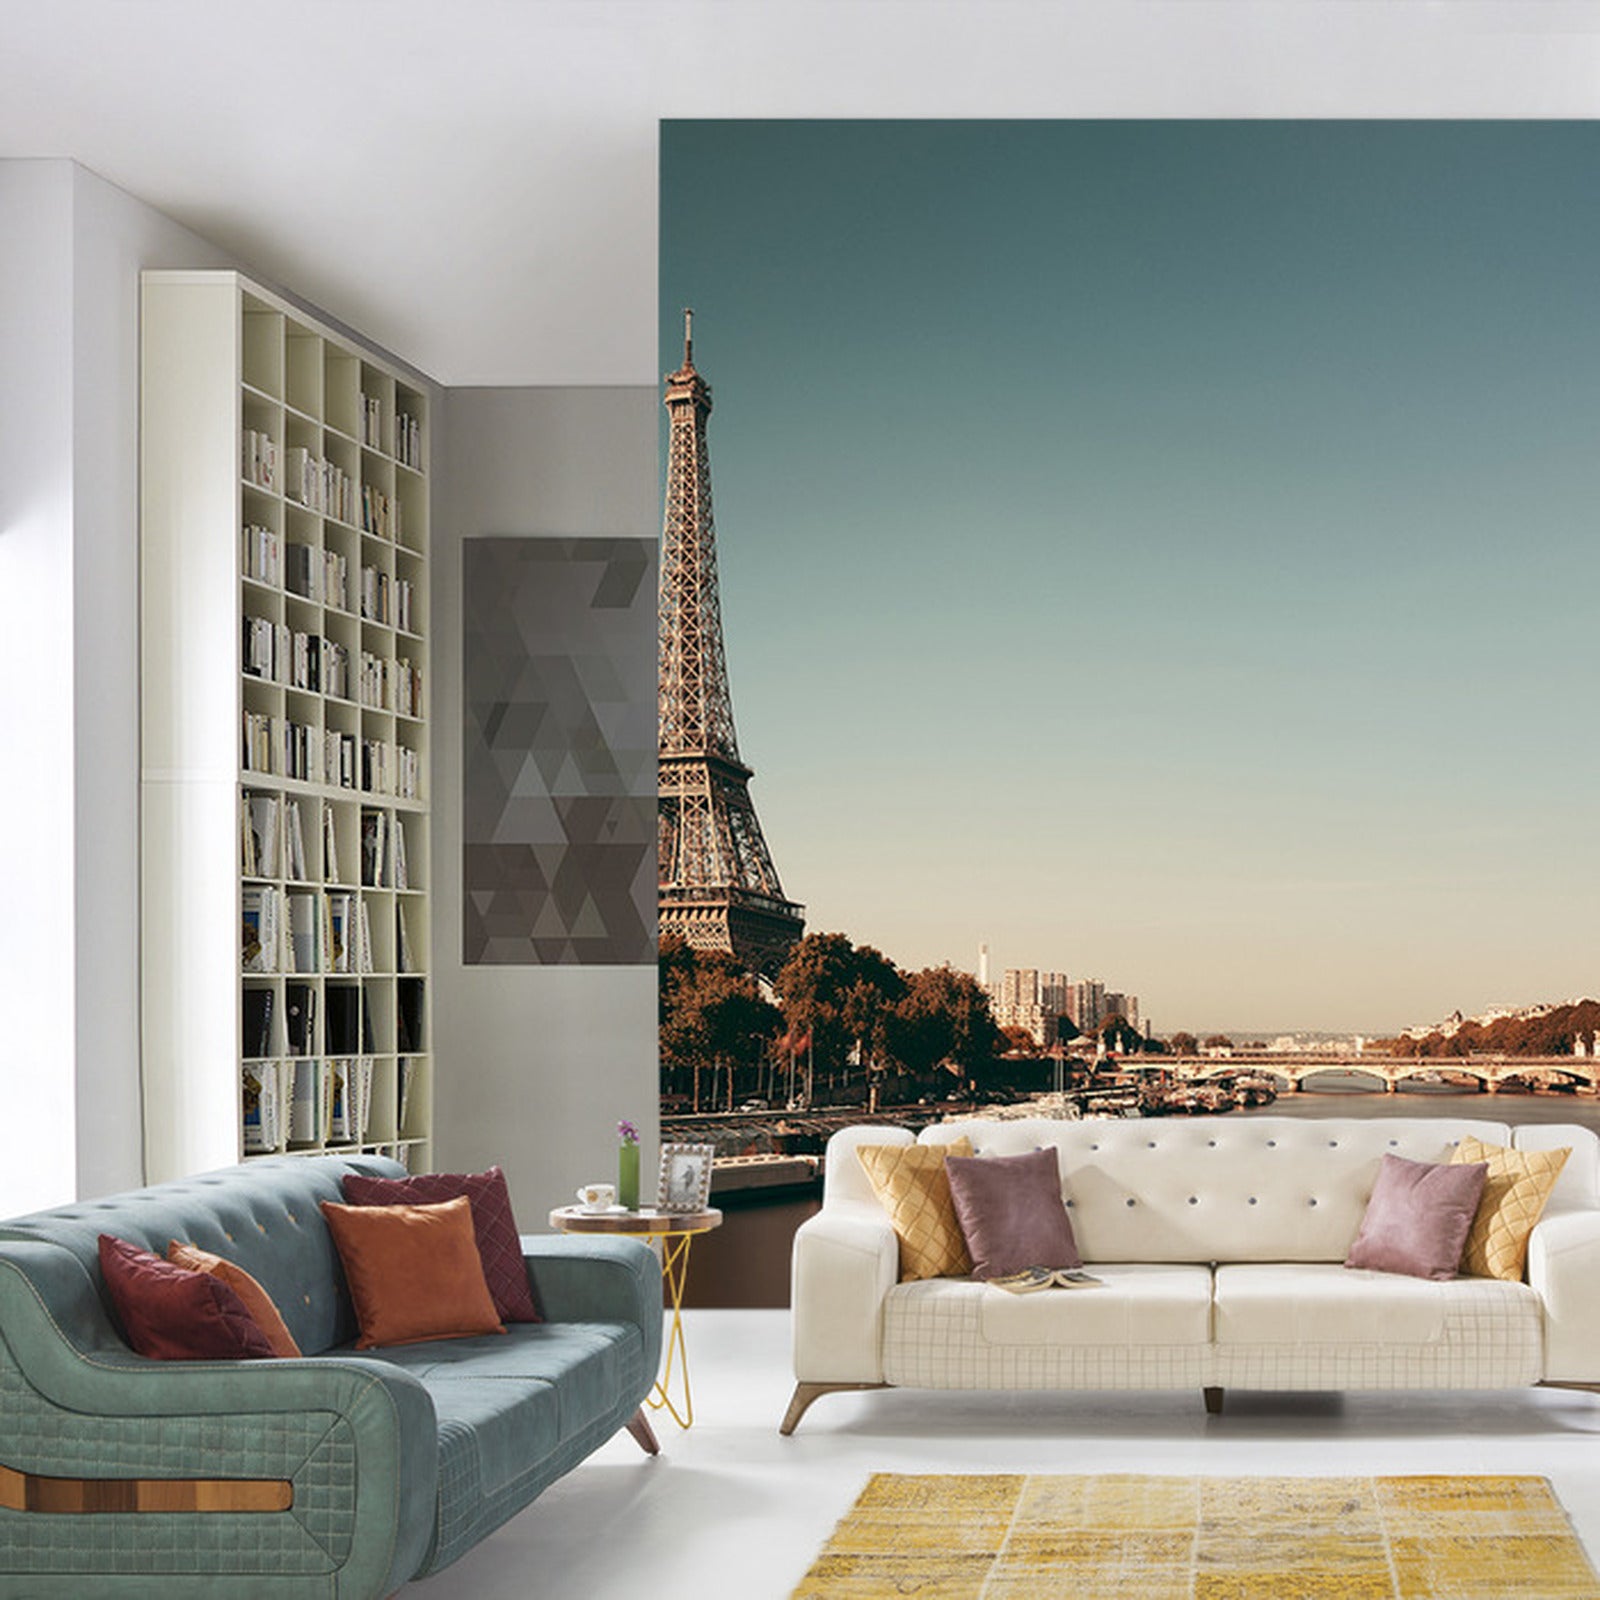 Fototapet Paris Eiffeltårnet